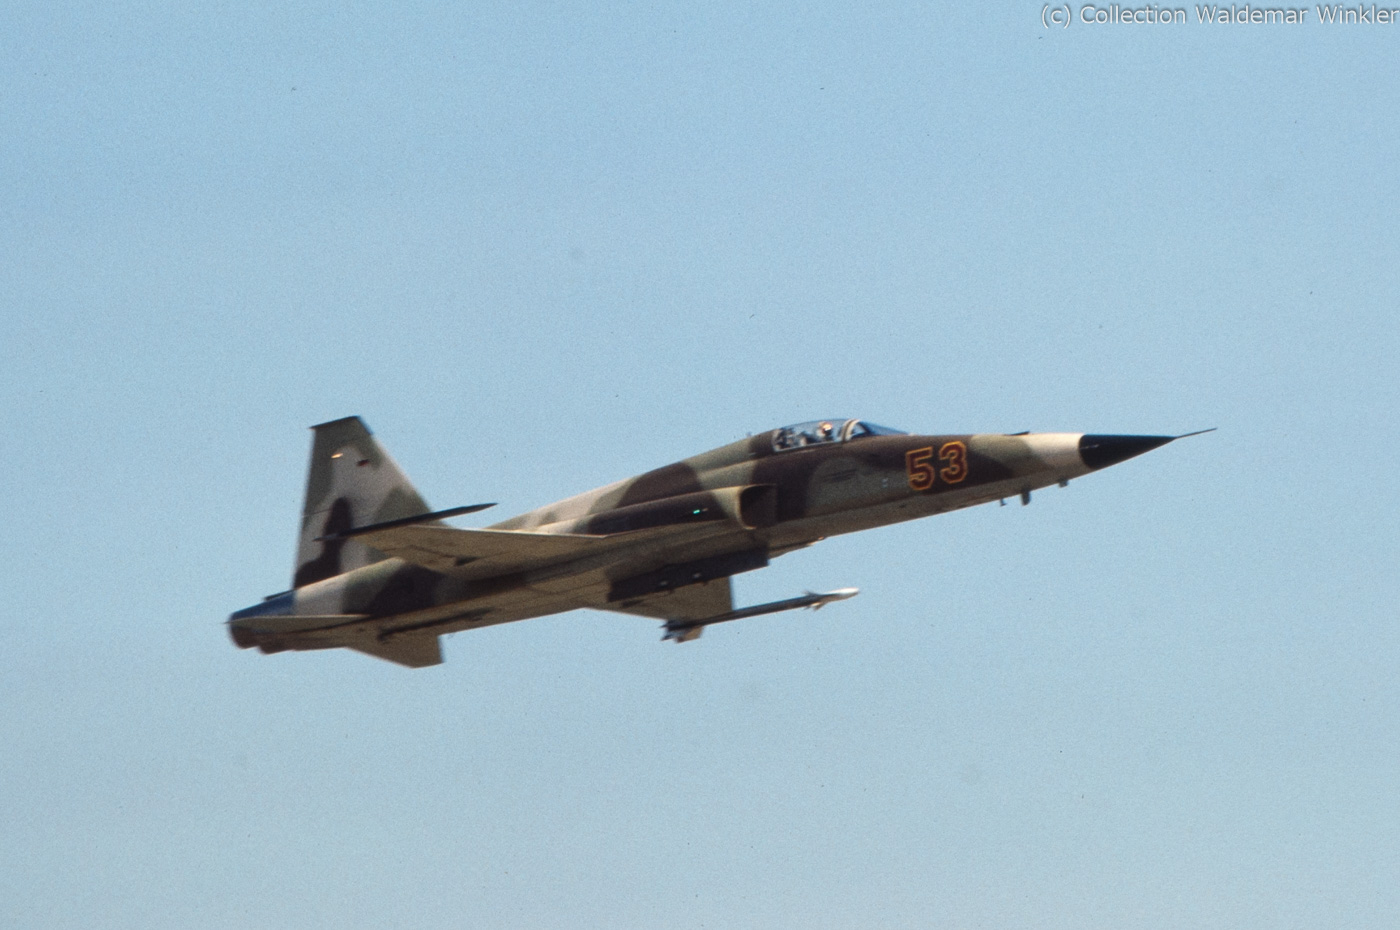 F-5E_Tiger_II_DSC_3330.jpg